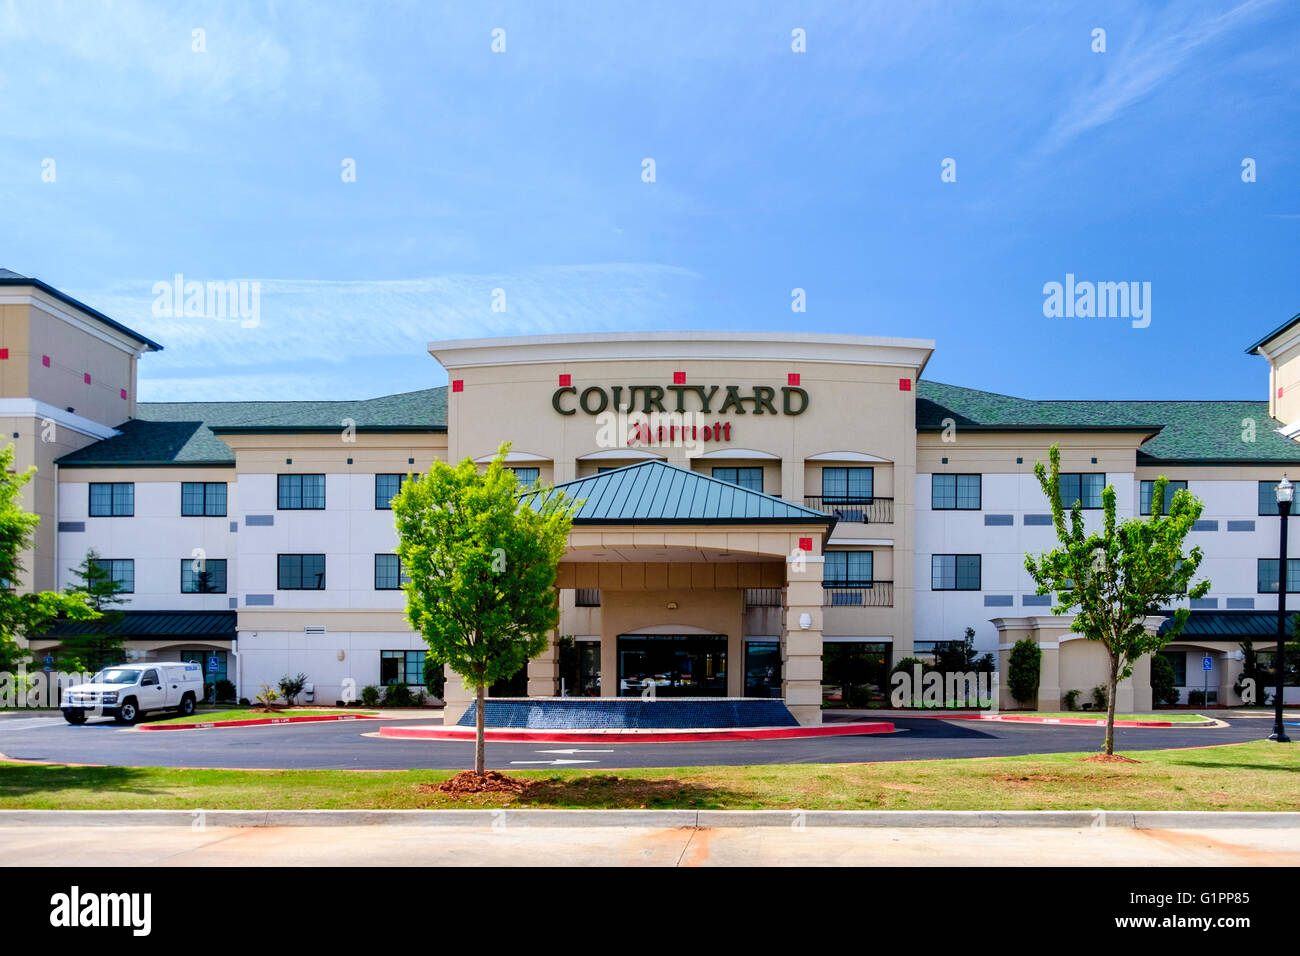 Comfort Inn, a Comfort Inn,hotel,logo,exterior,front,sign,g Stock Photo